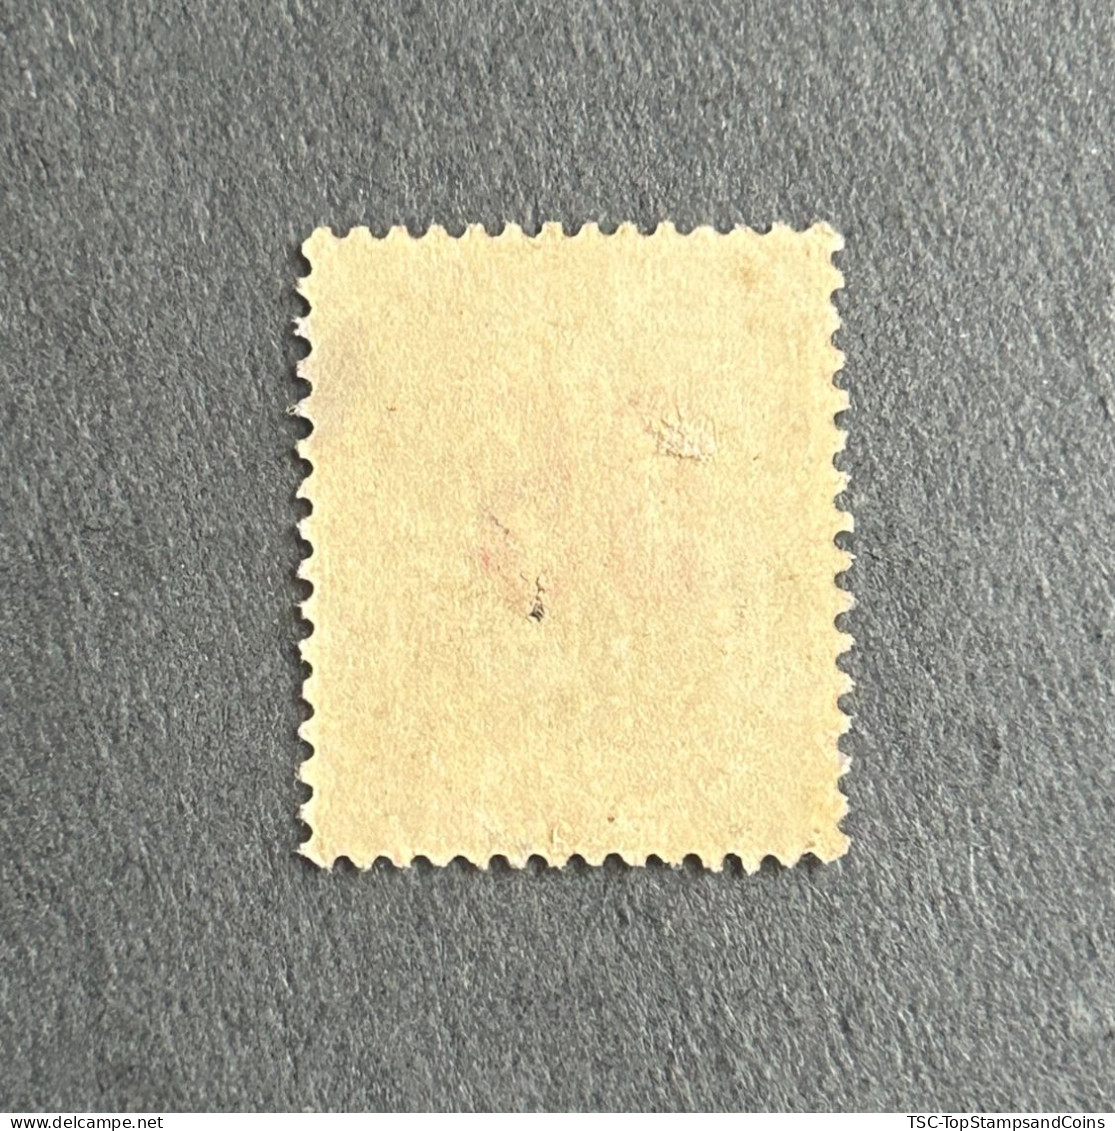 FRAGA0068U6 - Mythology - Surcharged 5 C Over 15 C Used Stamp - Gabon - 1912 - Used Stamps